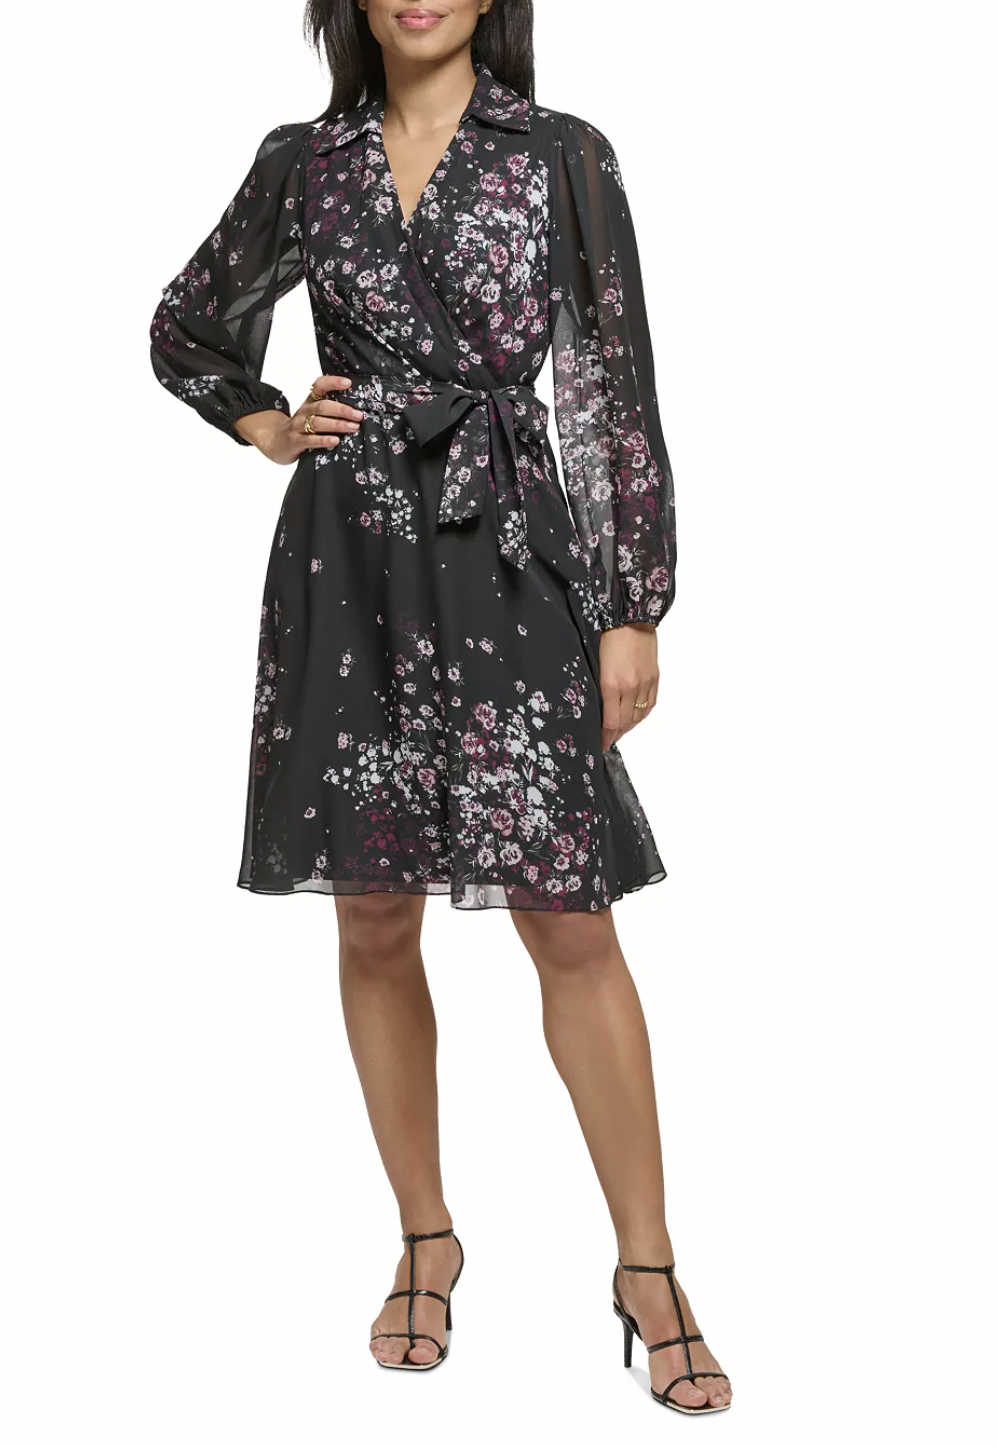 https://www.bloomingdales.com/shop/product/karen-kane-sheer-blouson-sleeve-dress?ID=4446101